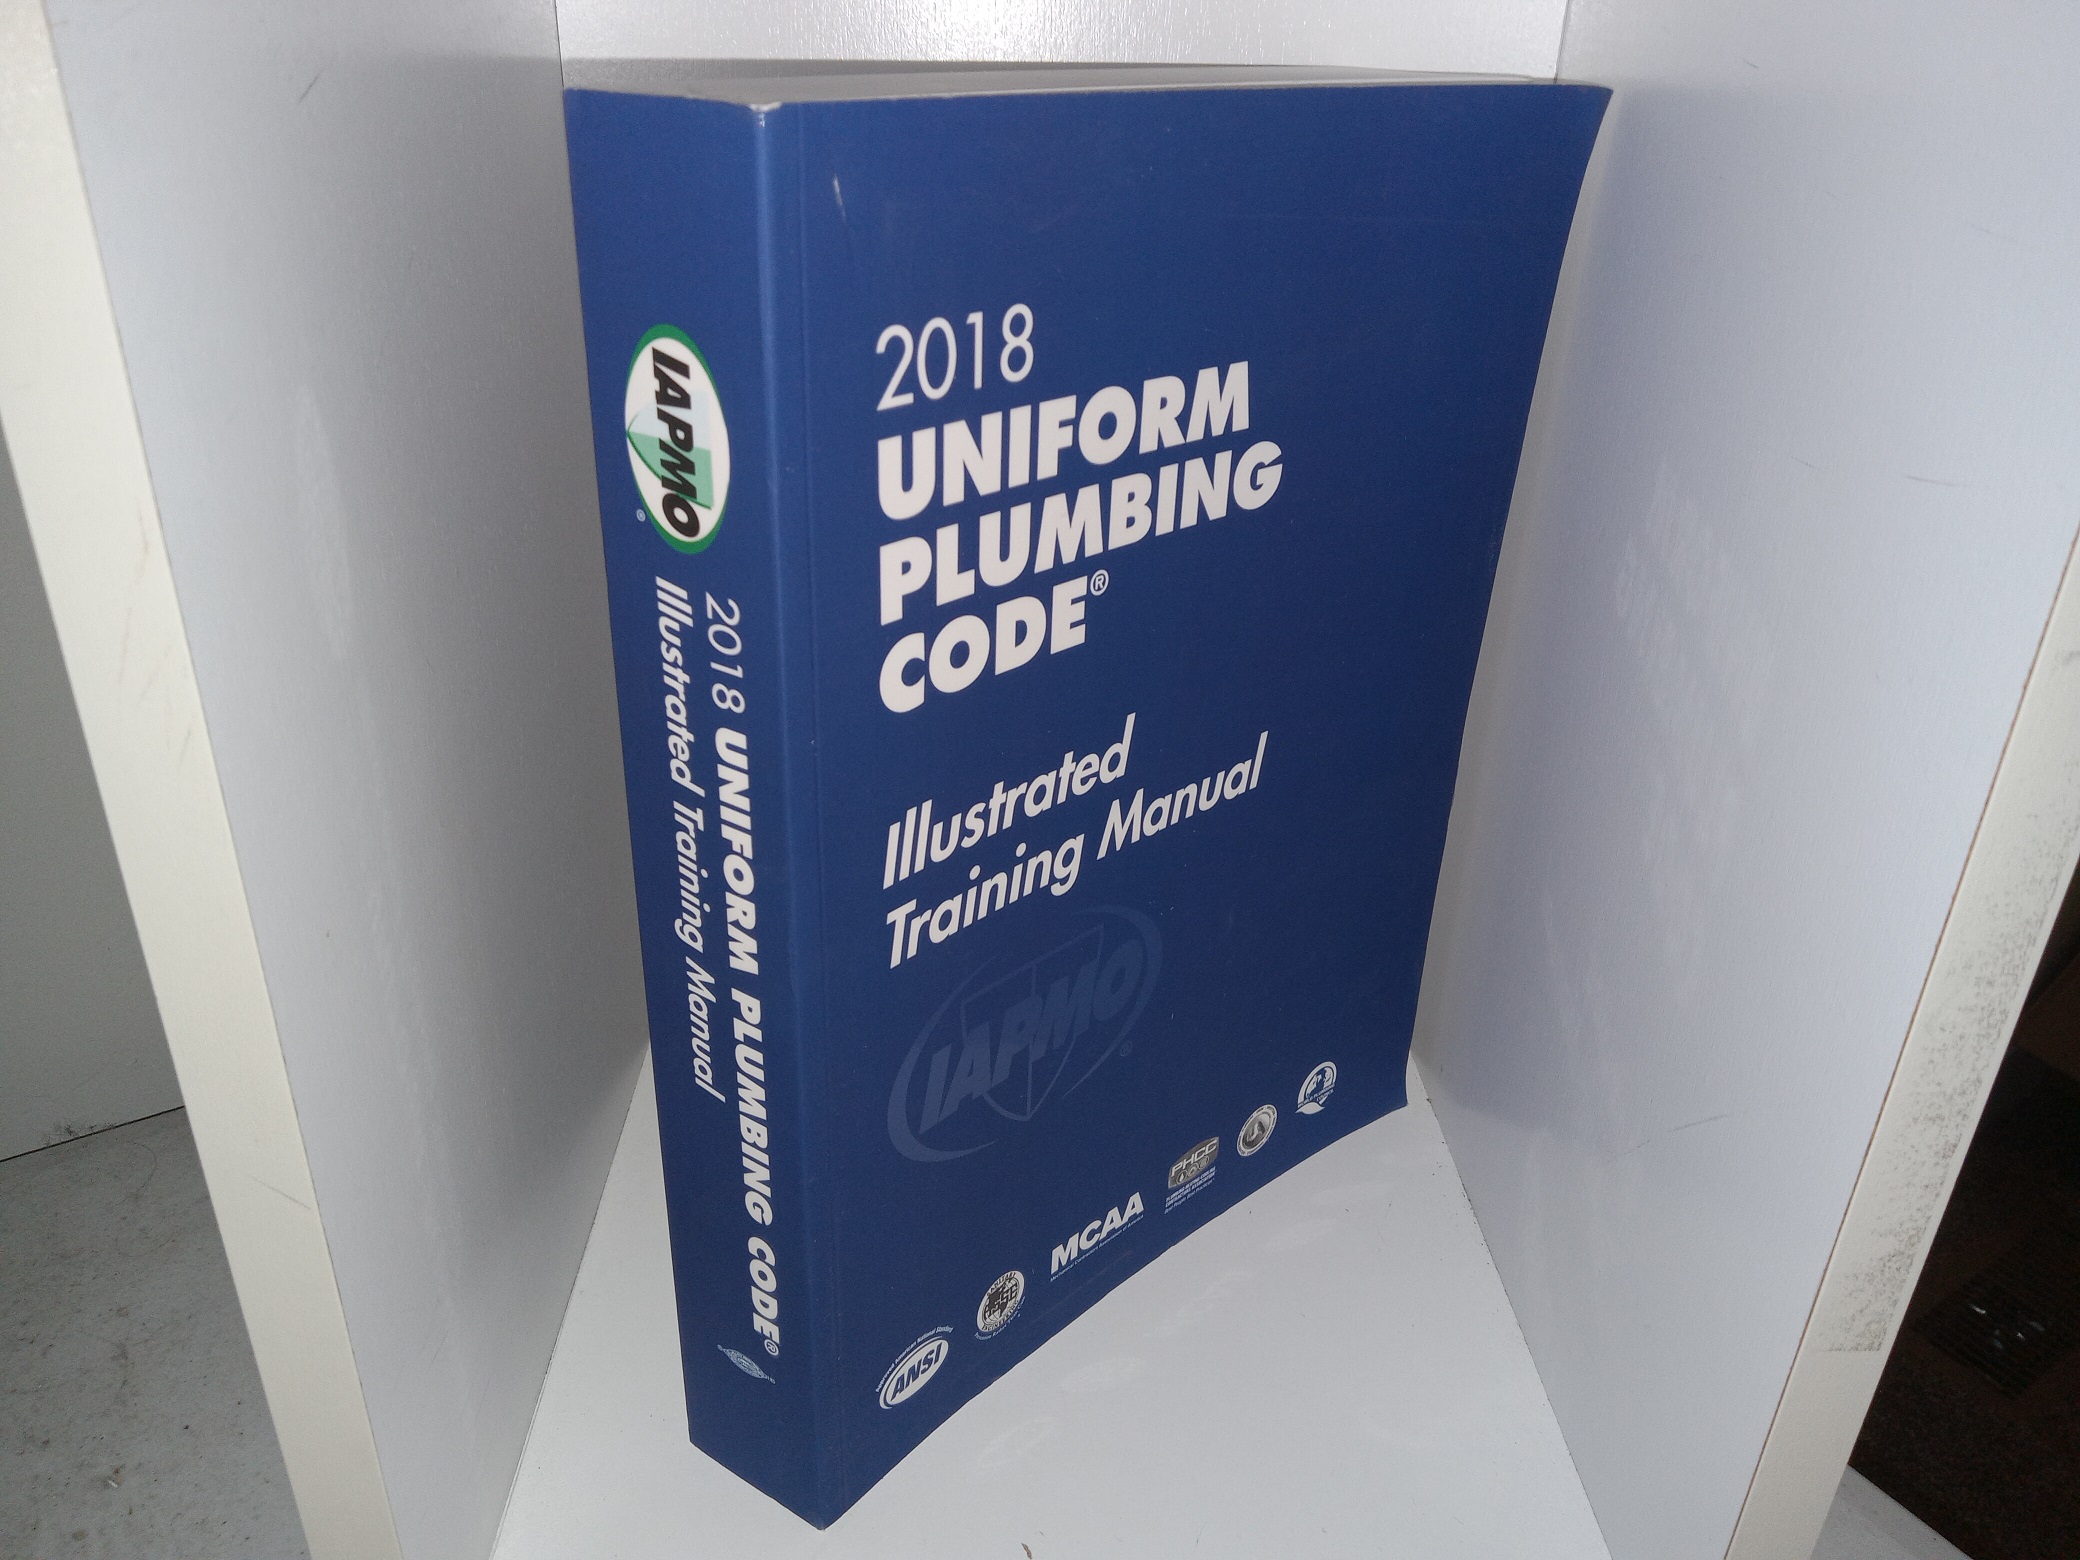 2018 uniform plumbing code illustrated training manual download